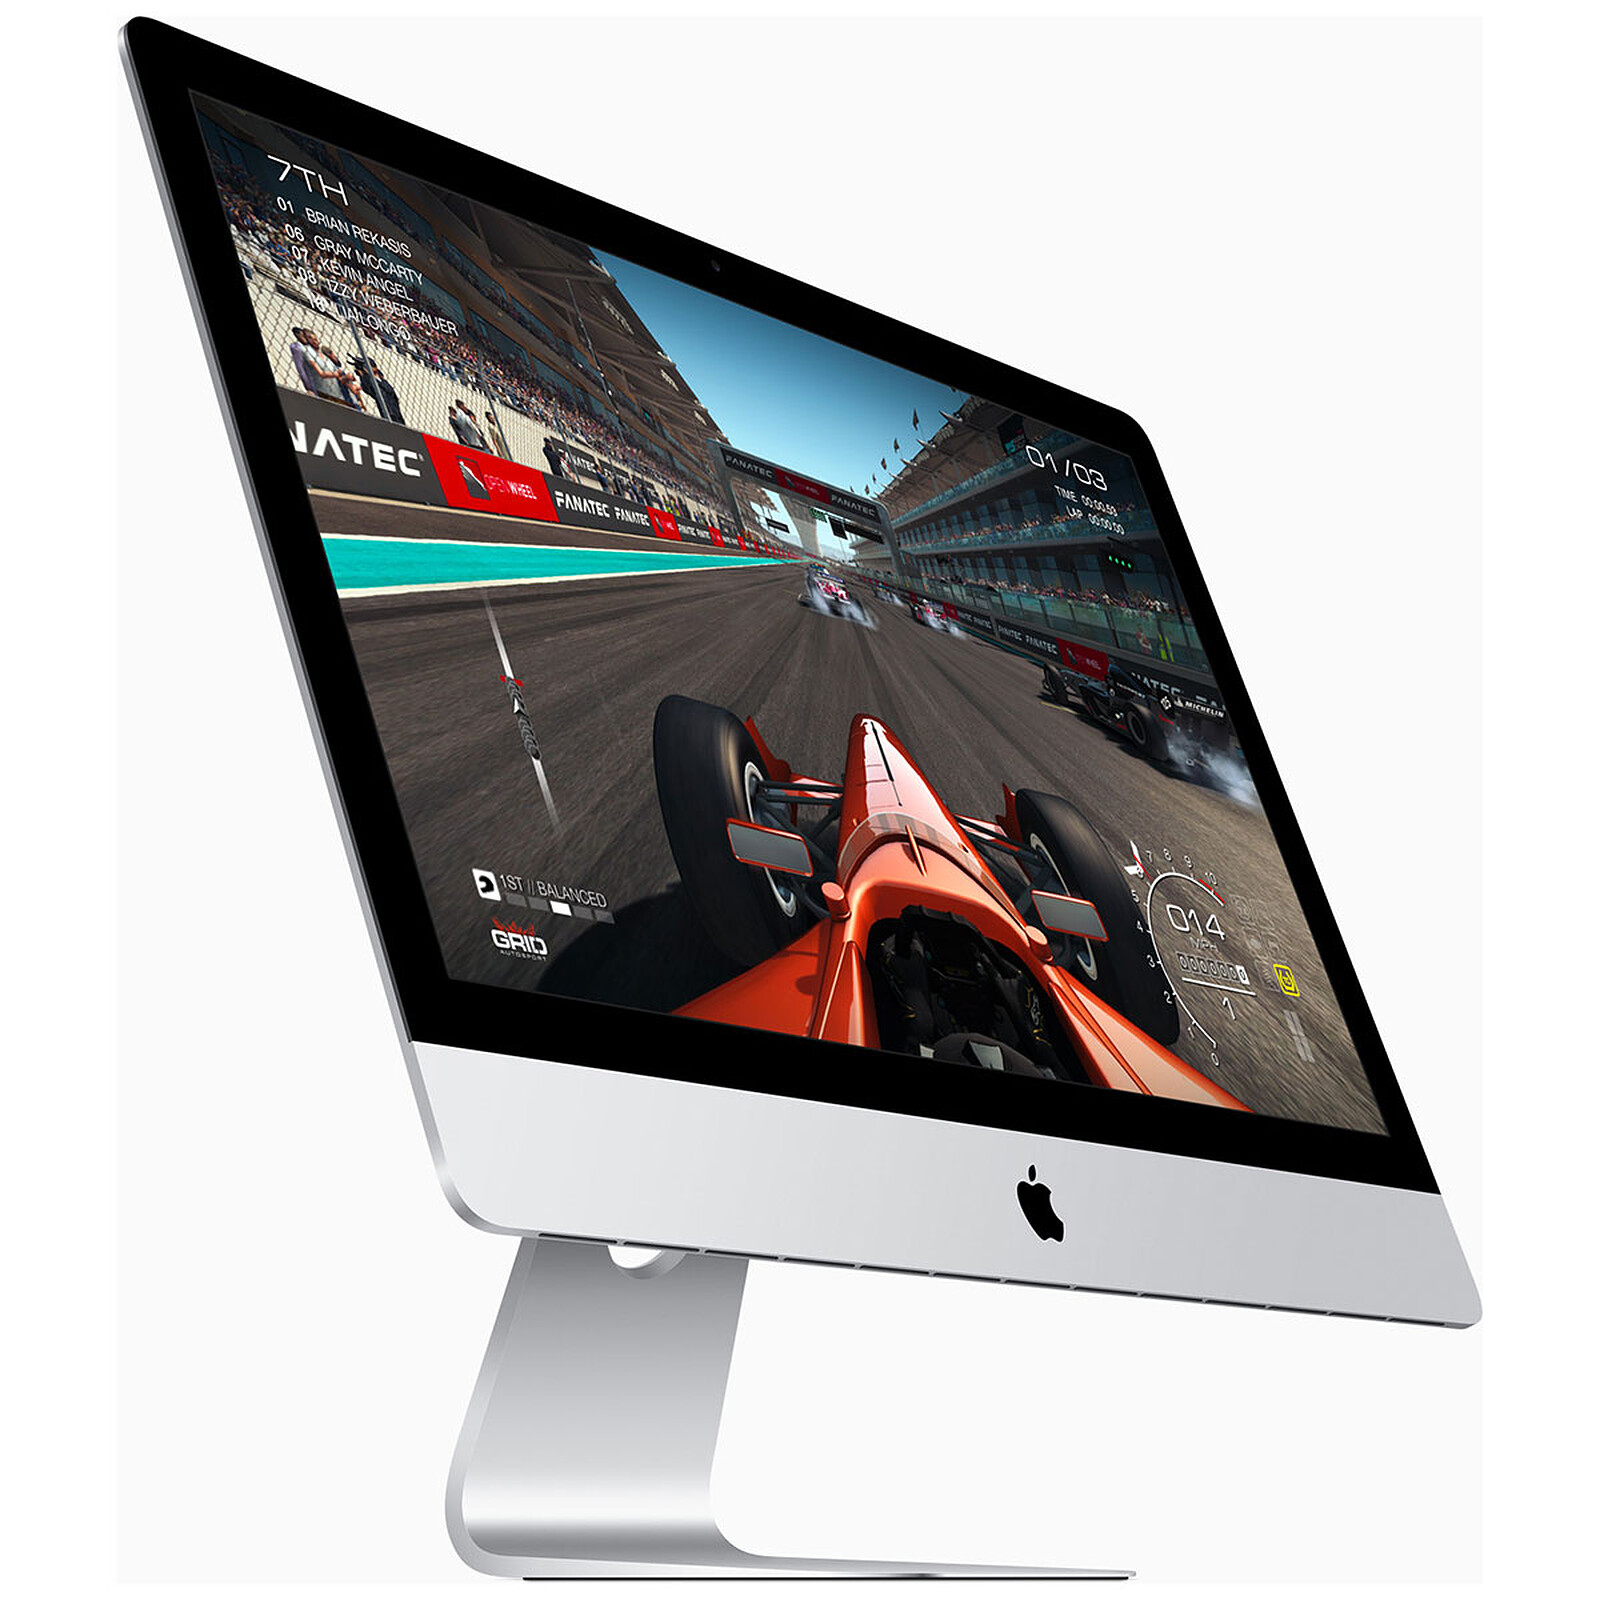 iMac 27 pouces 2011 i7 3.4GHz - proPCH